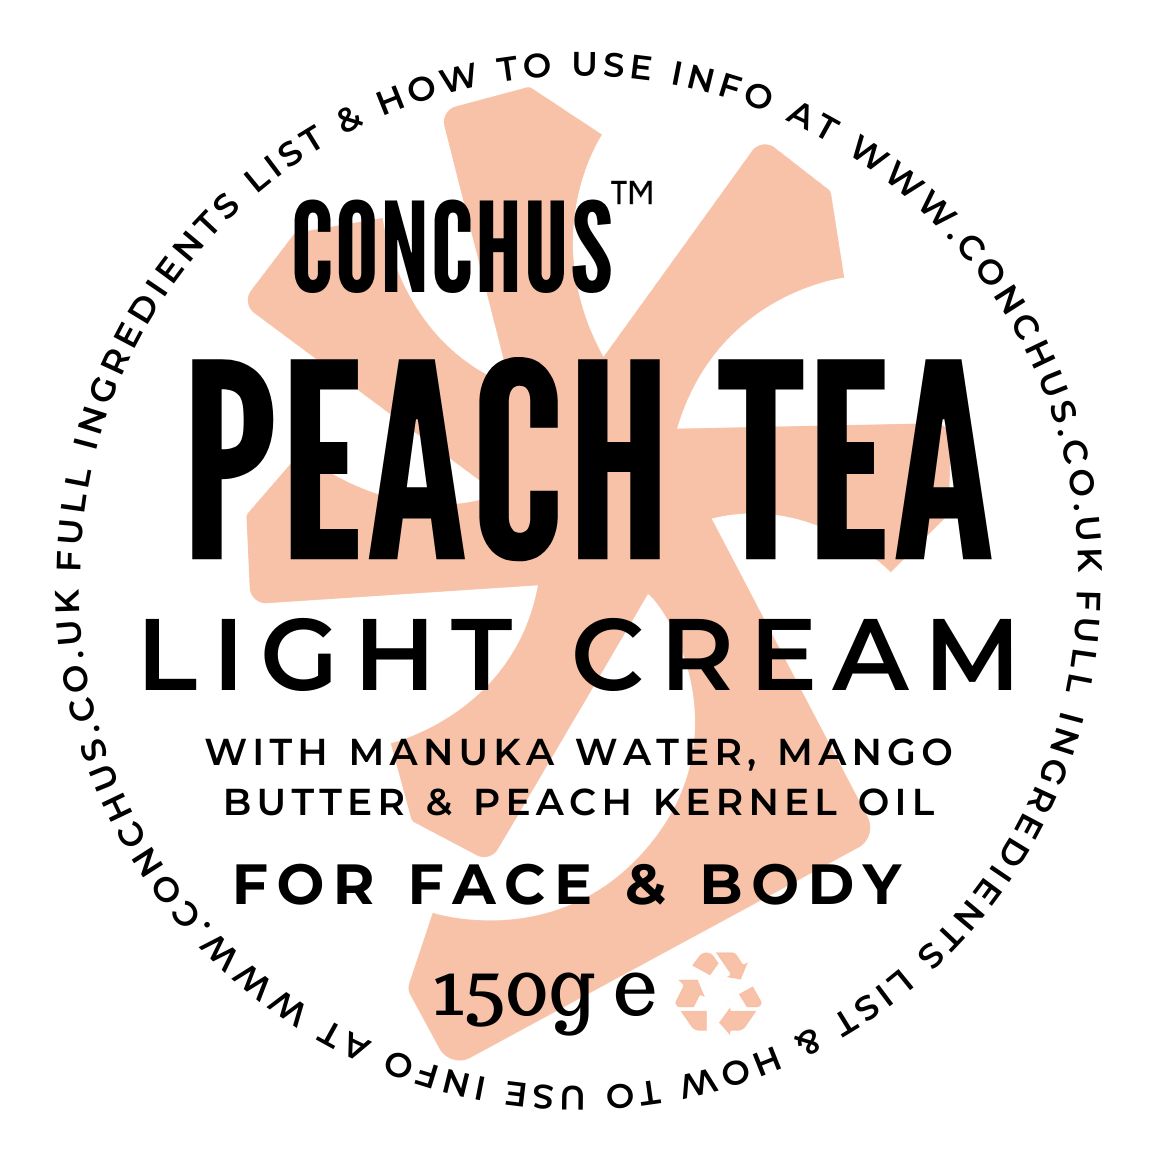 Peach Tea Light Cream